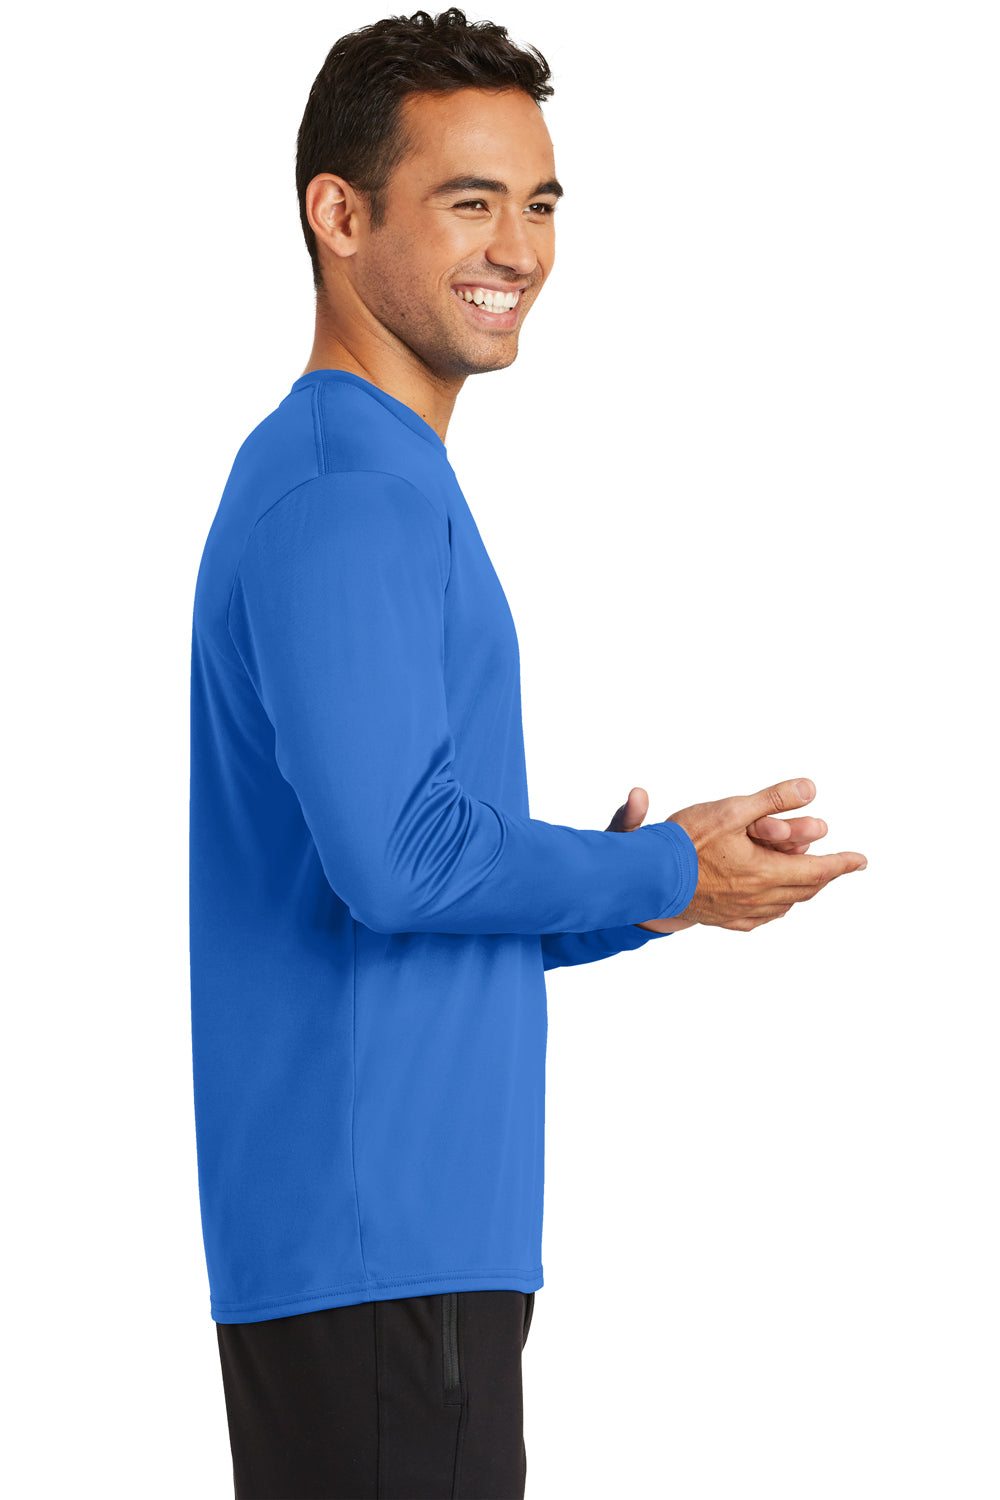 Port & Company PC380LS Mens Dry Zone Performance Moisture Wicking Long Sleeve Crewneck T-Shirt Royal Blue Side